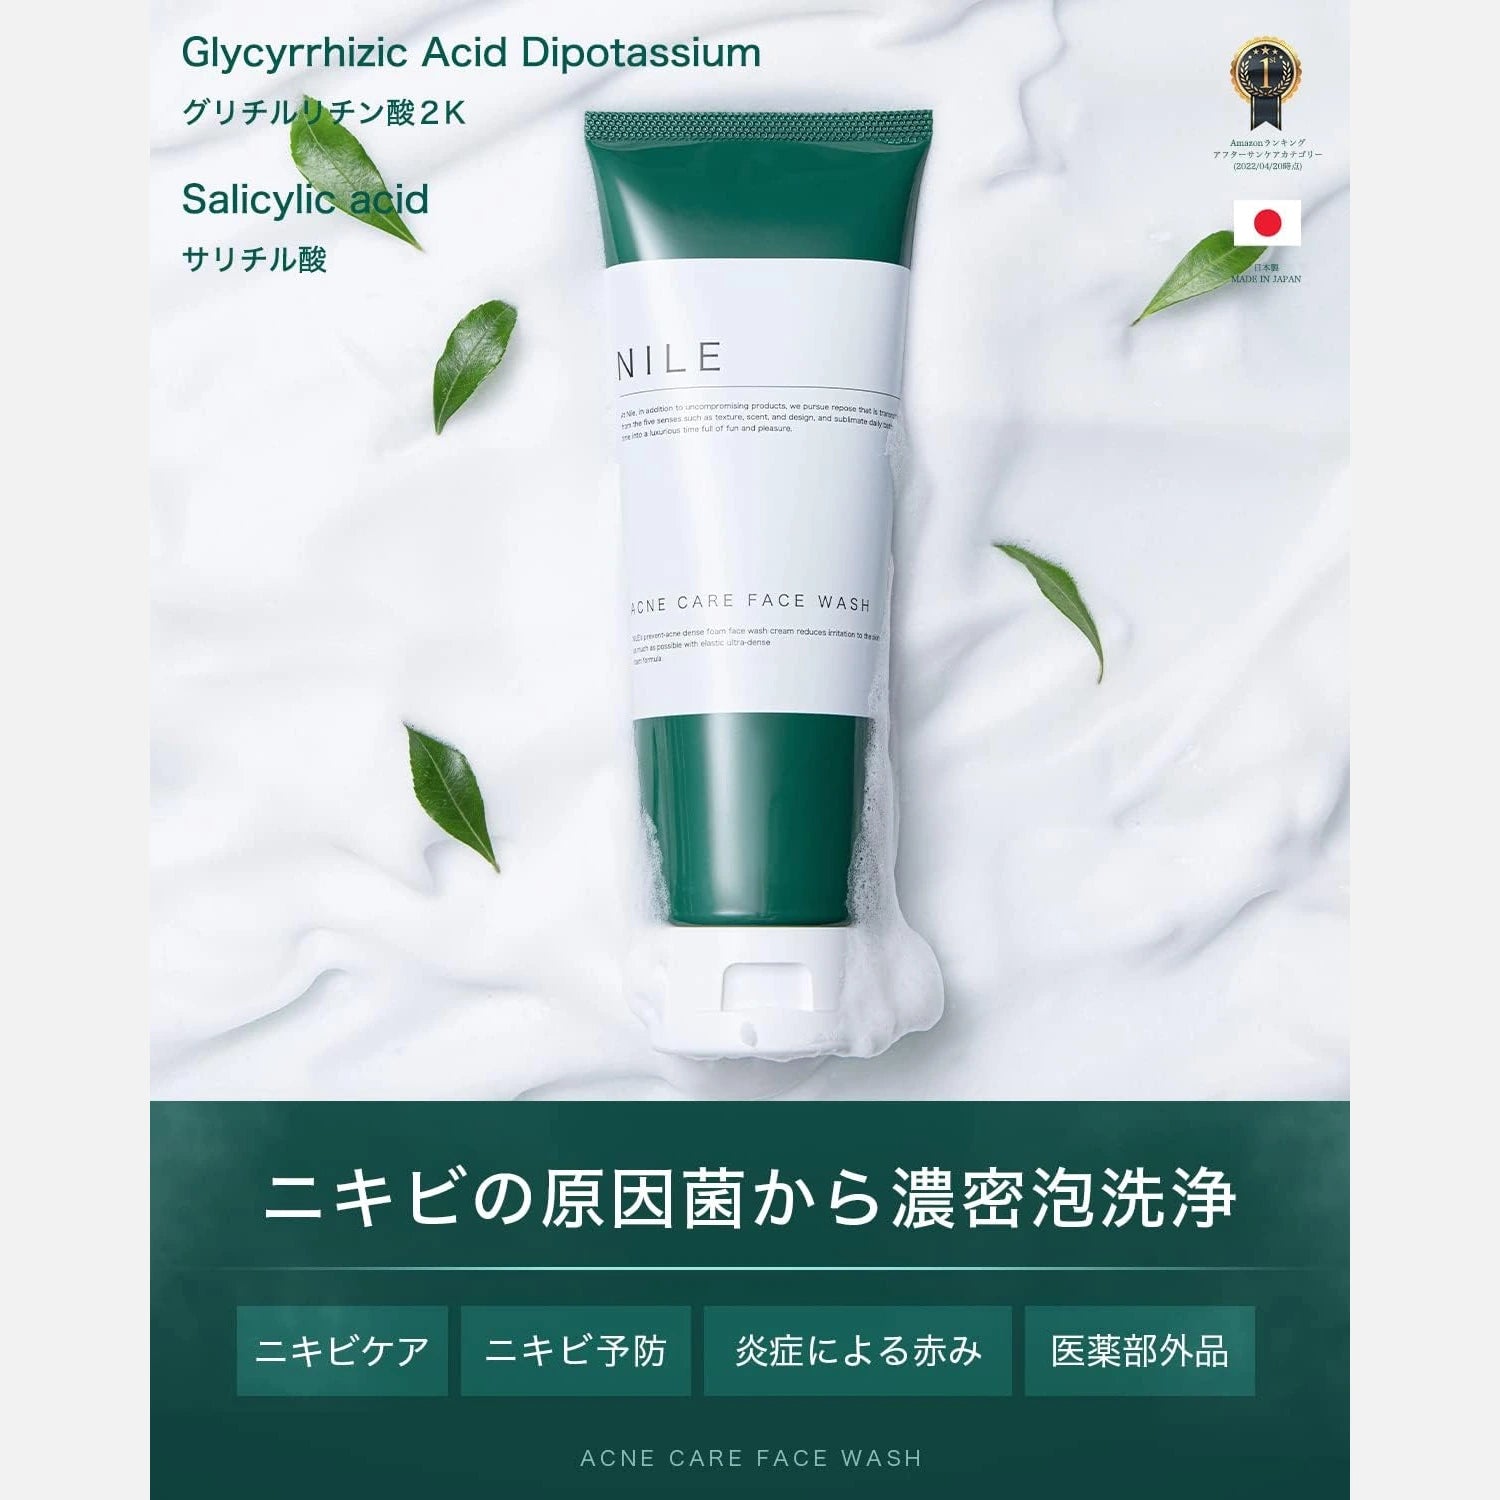 Nile Acne Care Face Wash 150g - Buy Me Japan